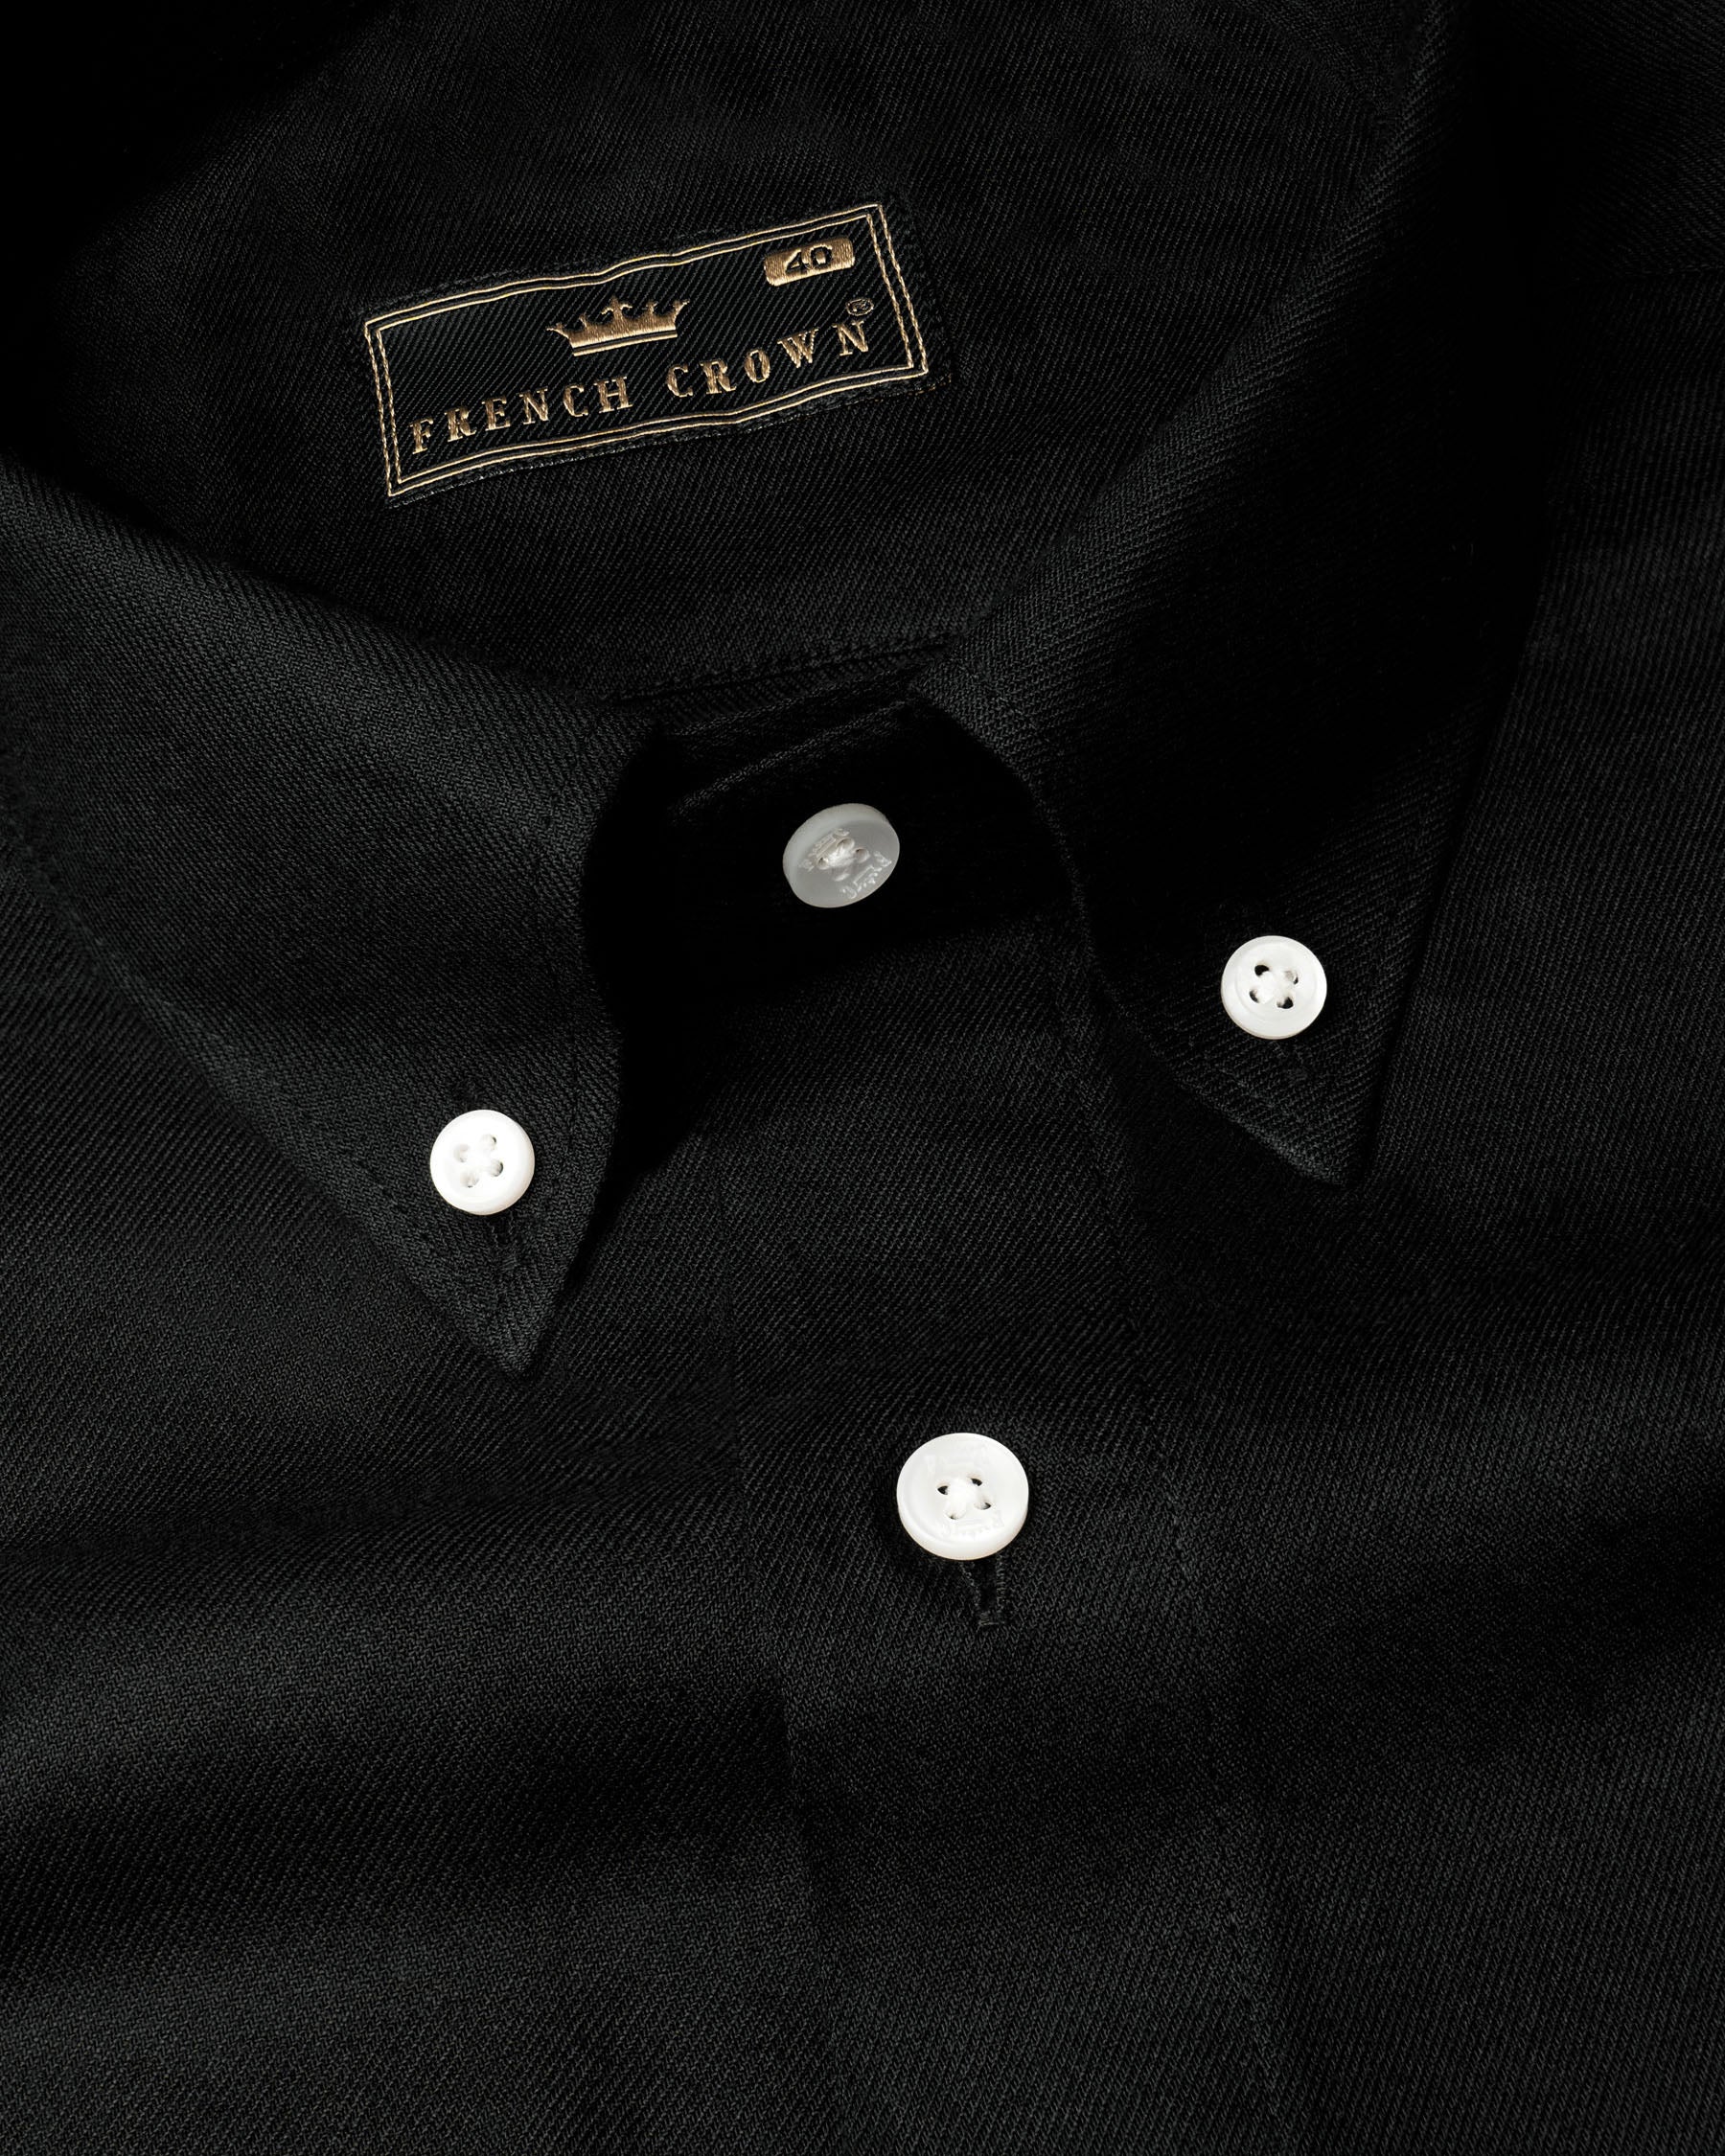 Jade Black Premium Cotton Shirt